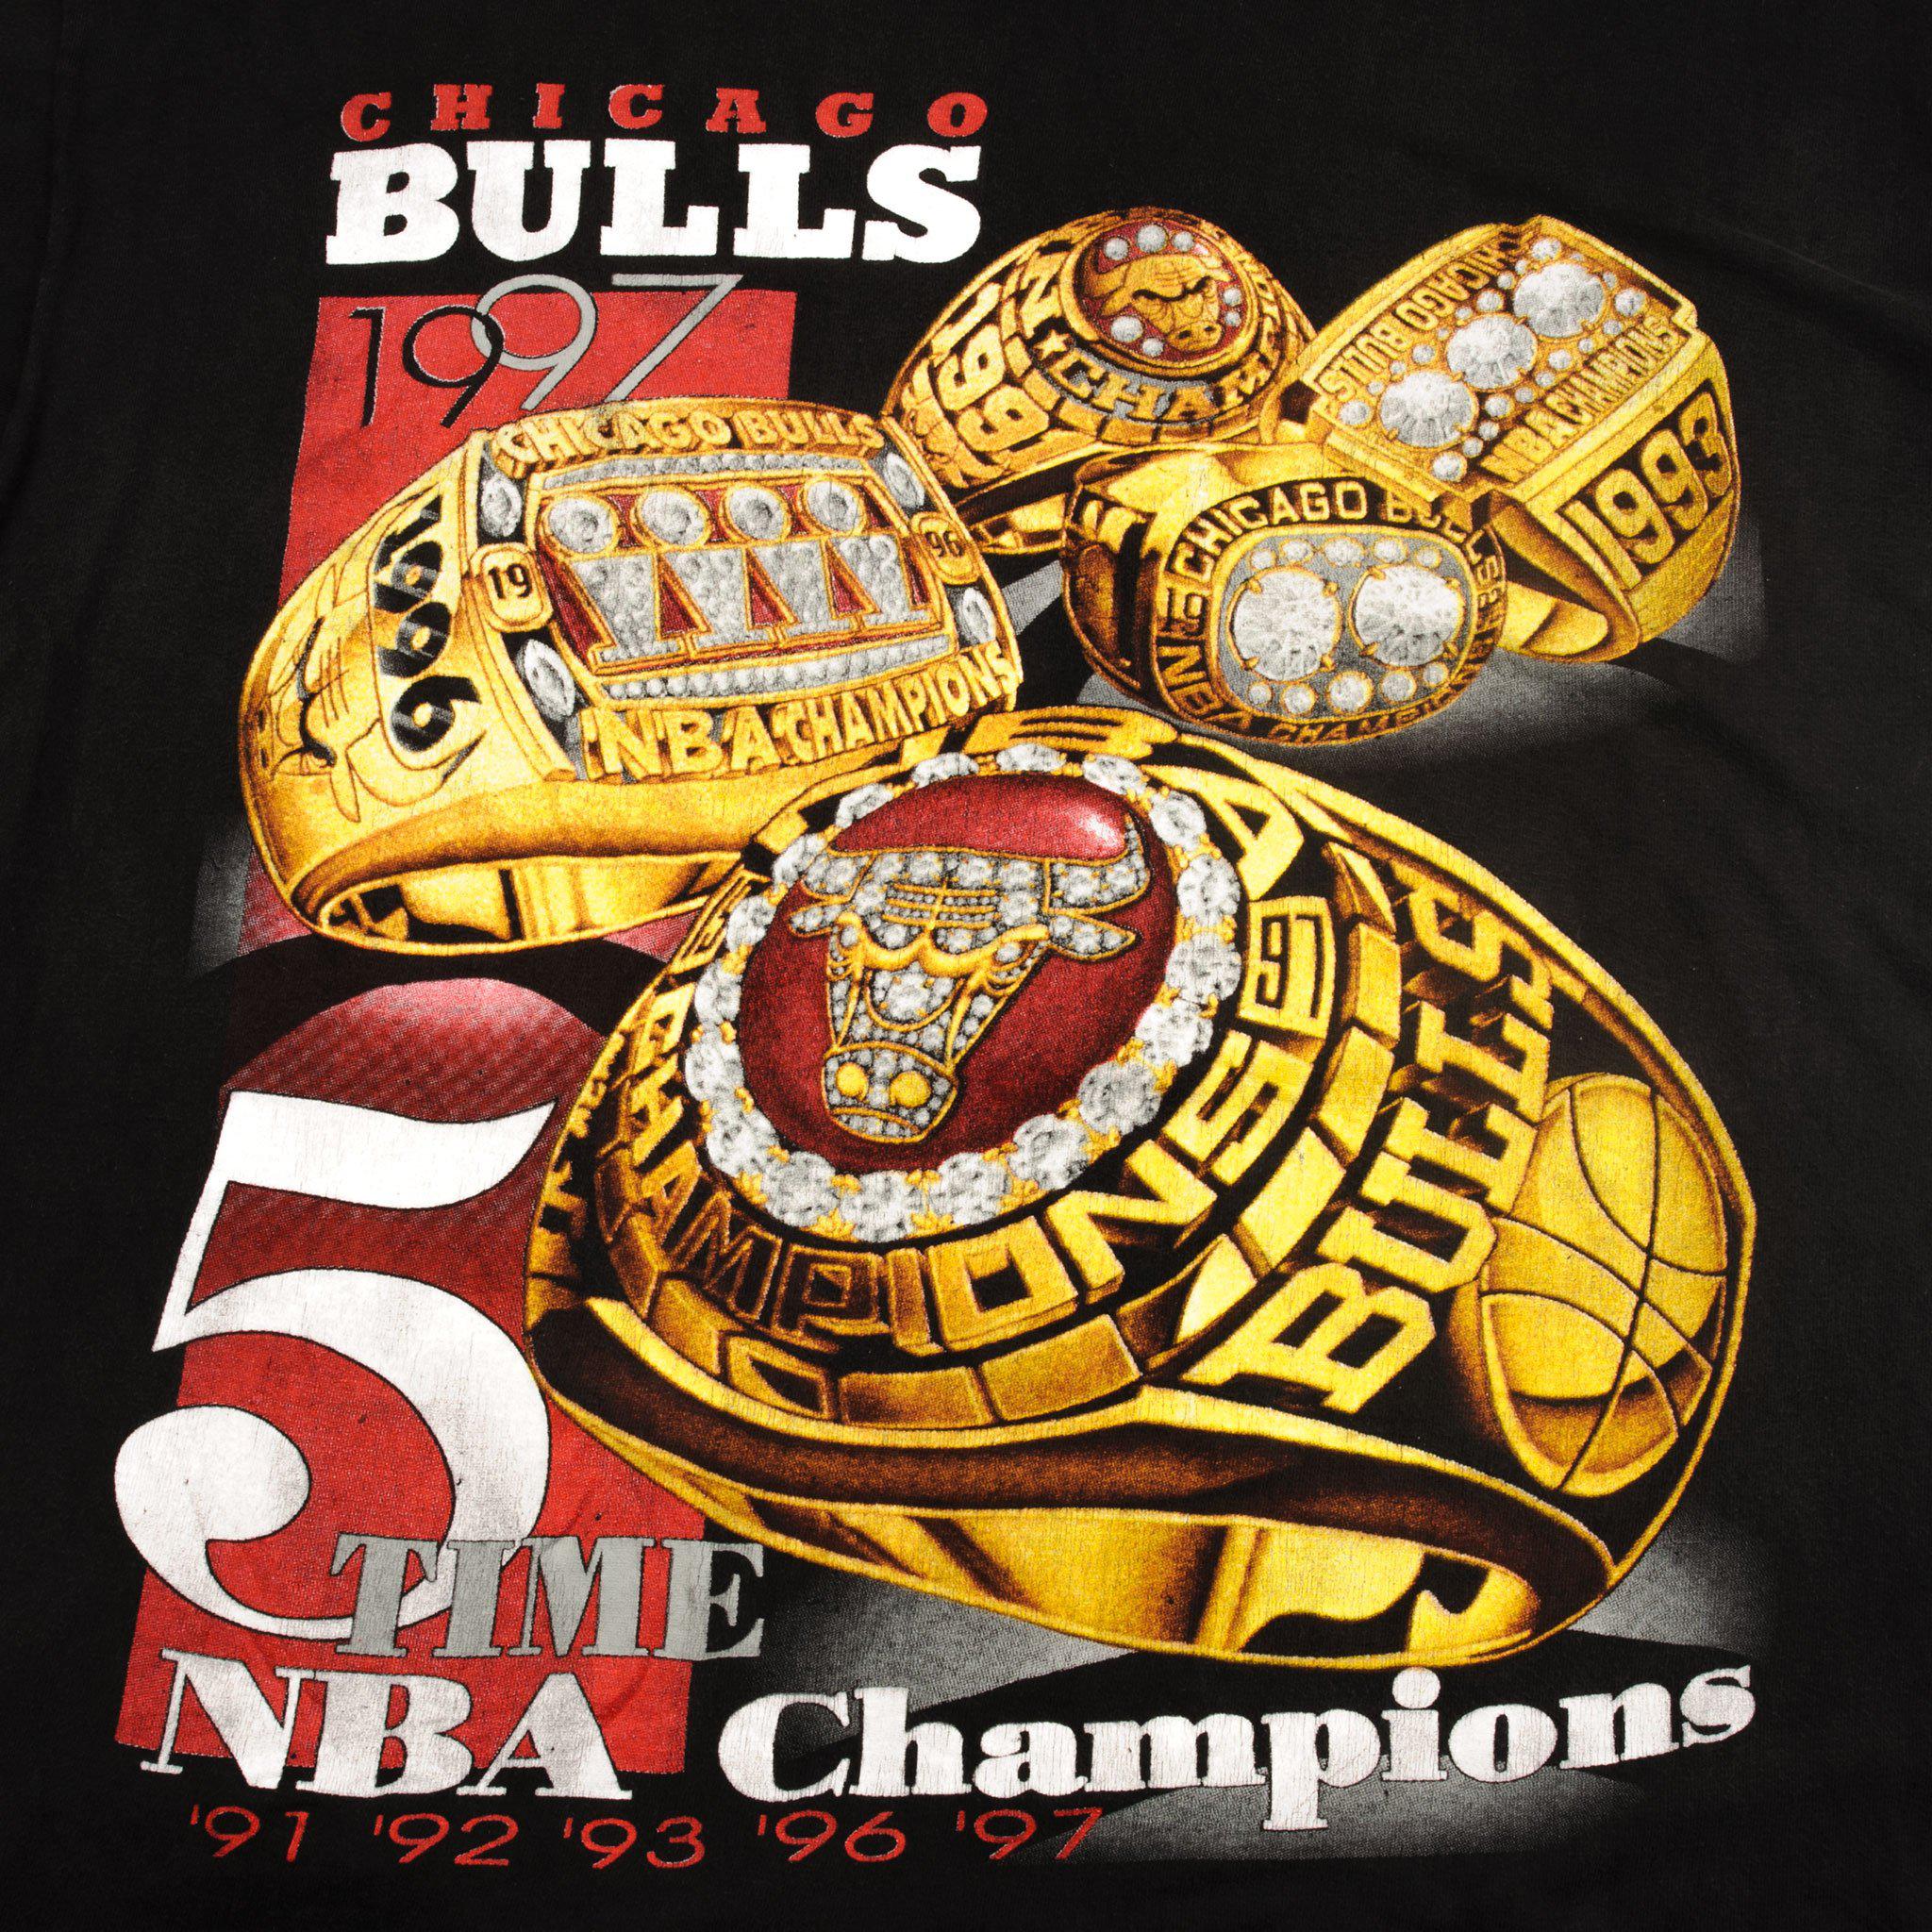 Team Pennant - Basketball - Chicago Bulls 1997 NBA Champions